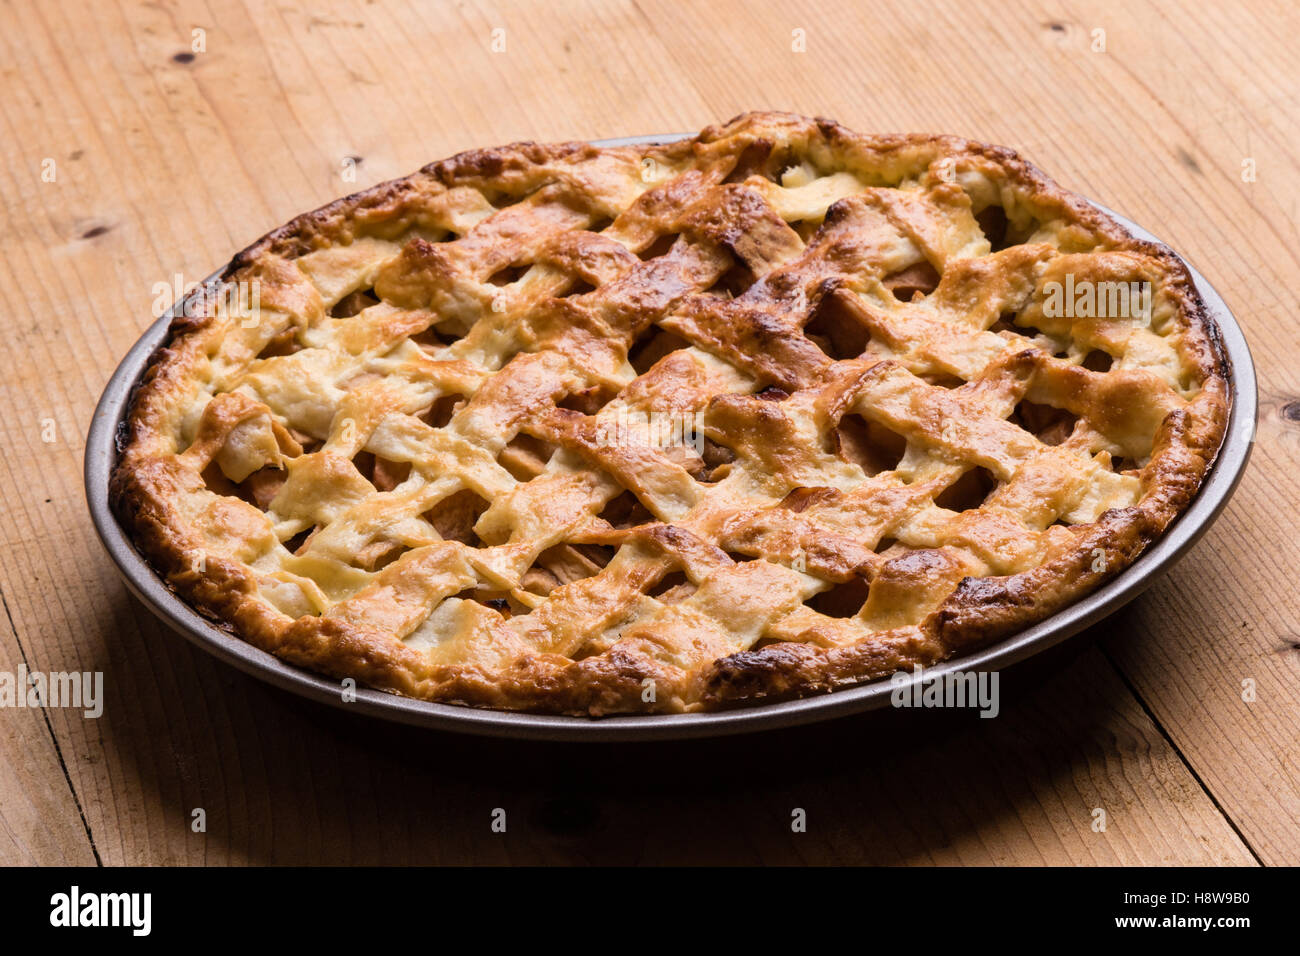 baked fresh apple pie on wooden table Stock Photo